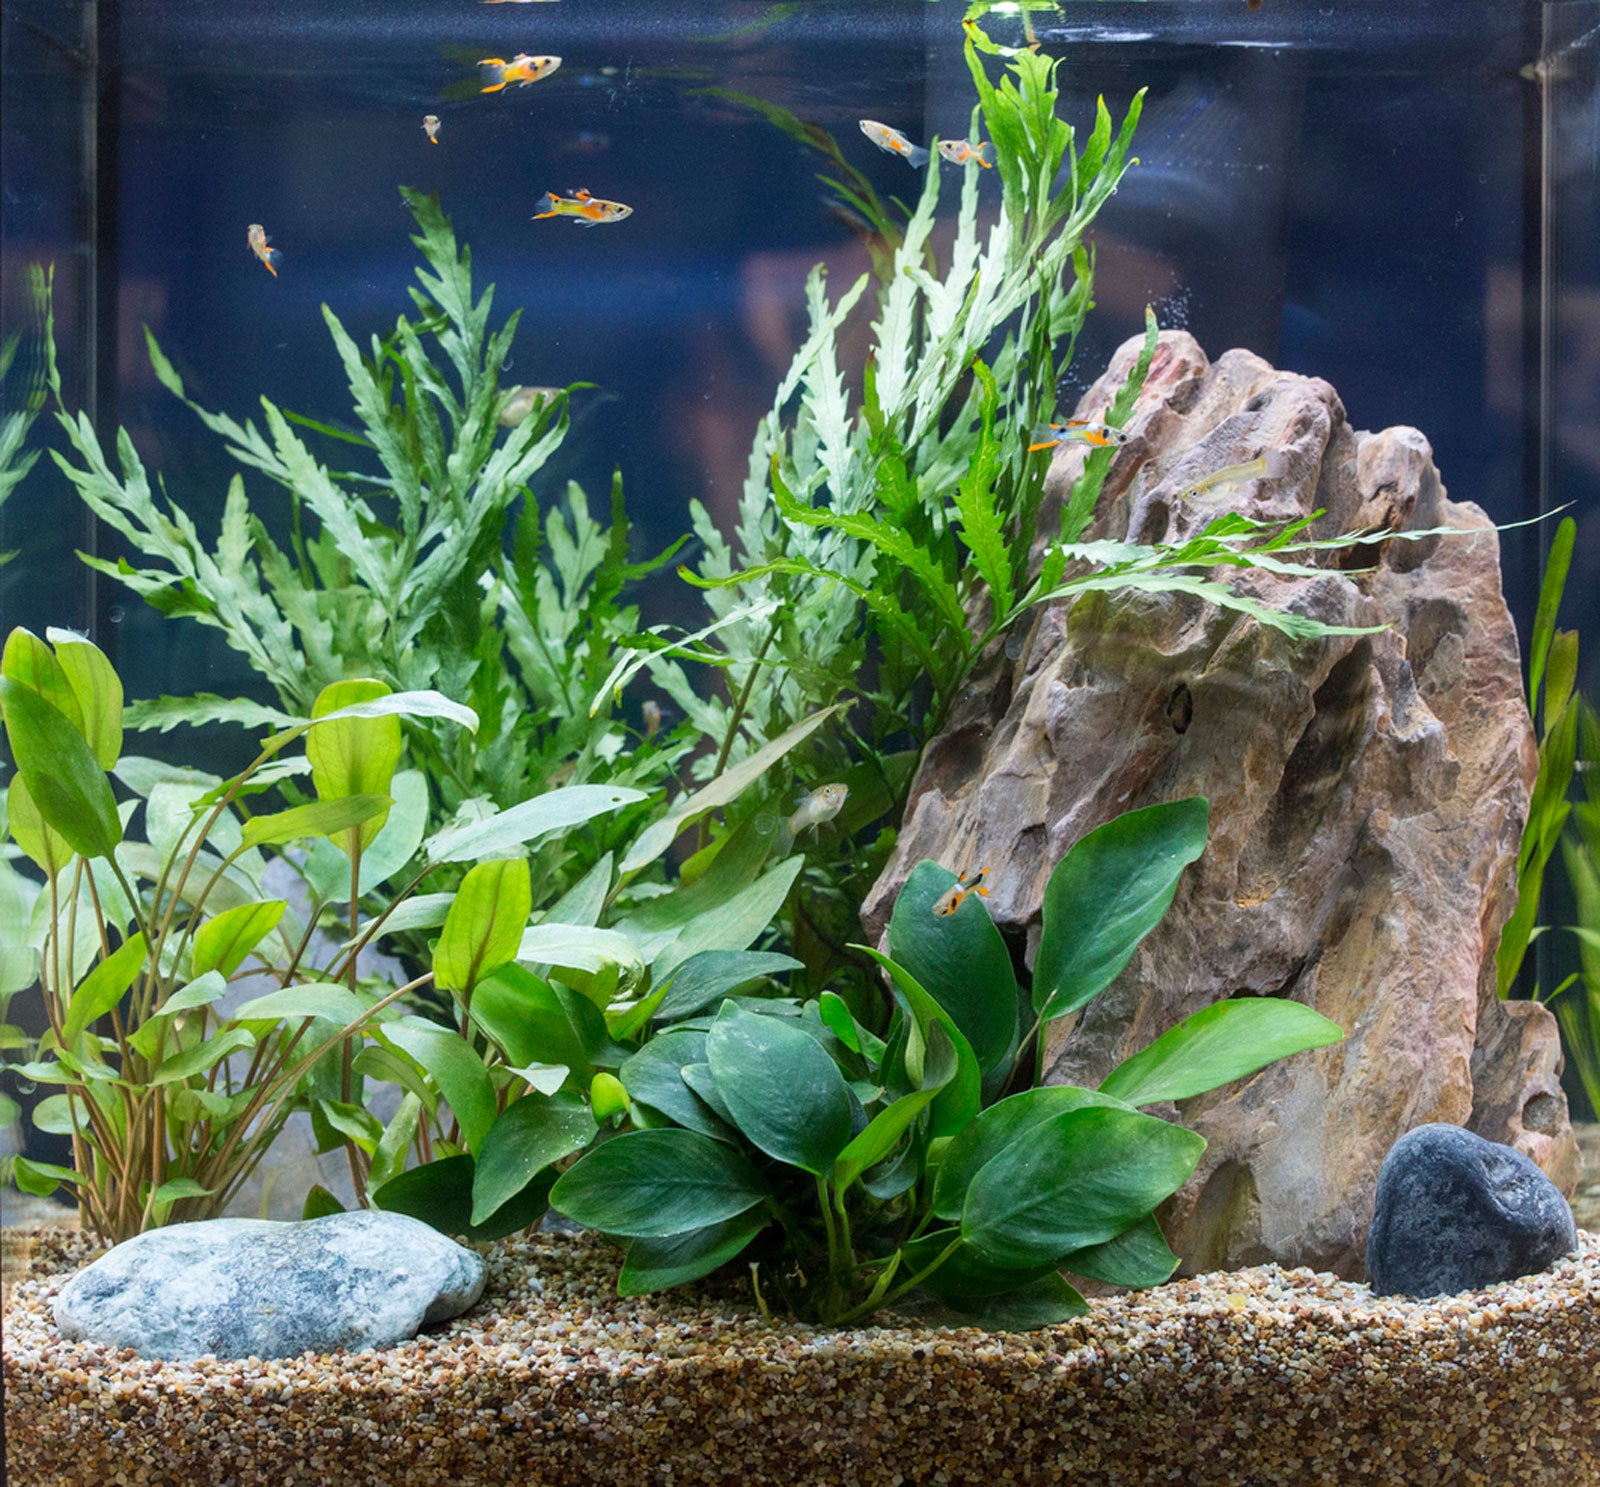 Using Live Plants in Your Home Aquarium